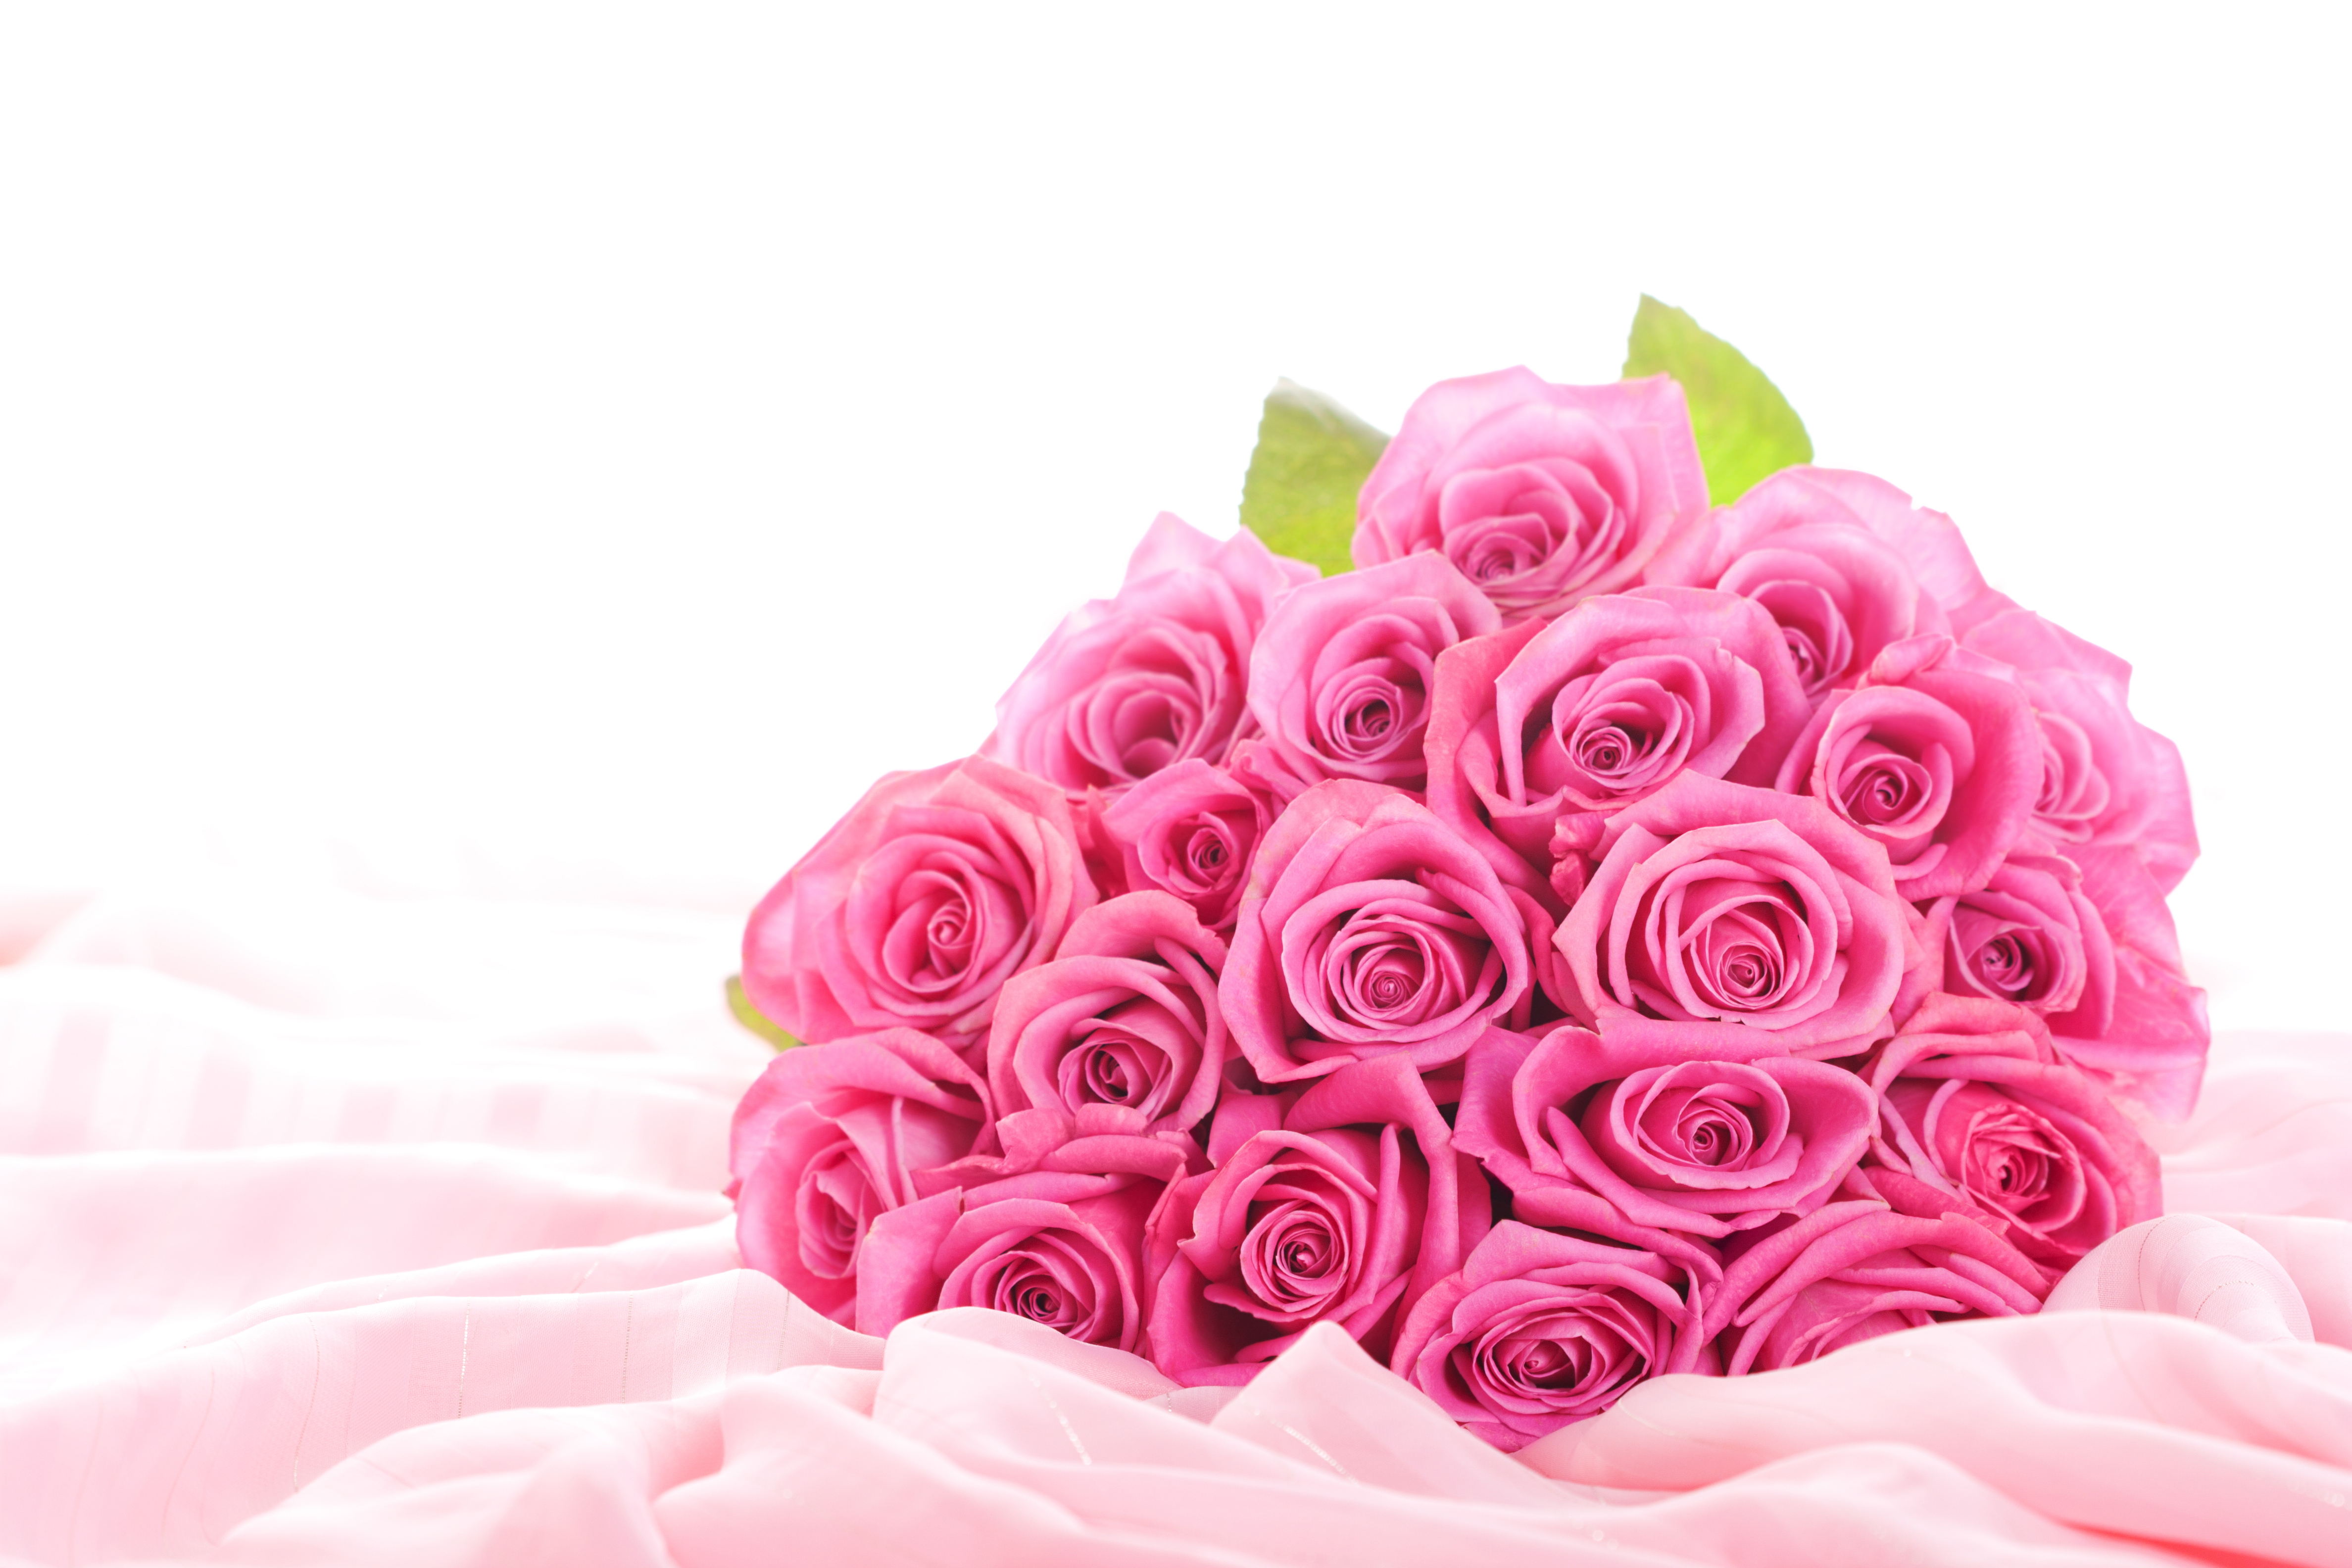 flowers roses pink flowers pink roses bouquet elegant flower buds